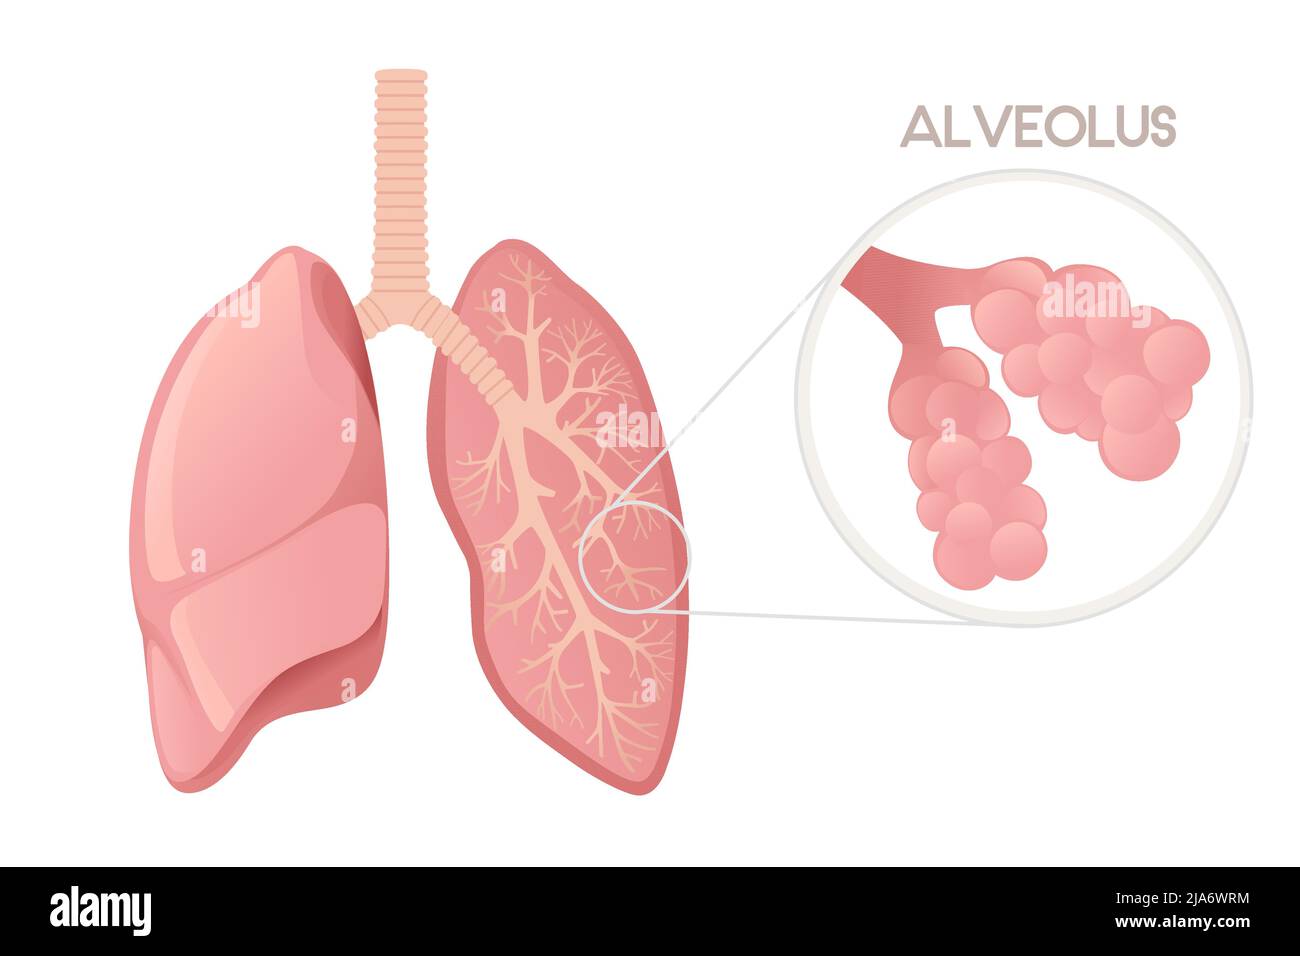 Human Lungs With Alveoli Cartoon Design Human Anatomy Organ Vector Illustration On White